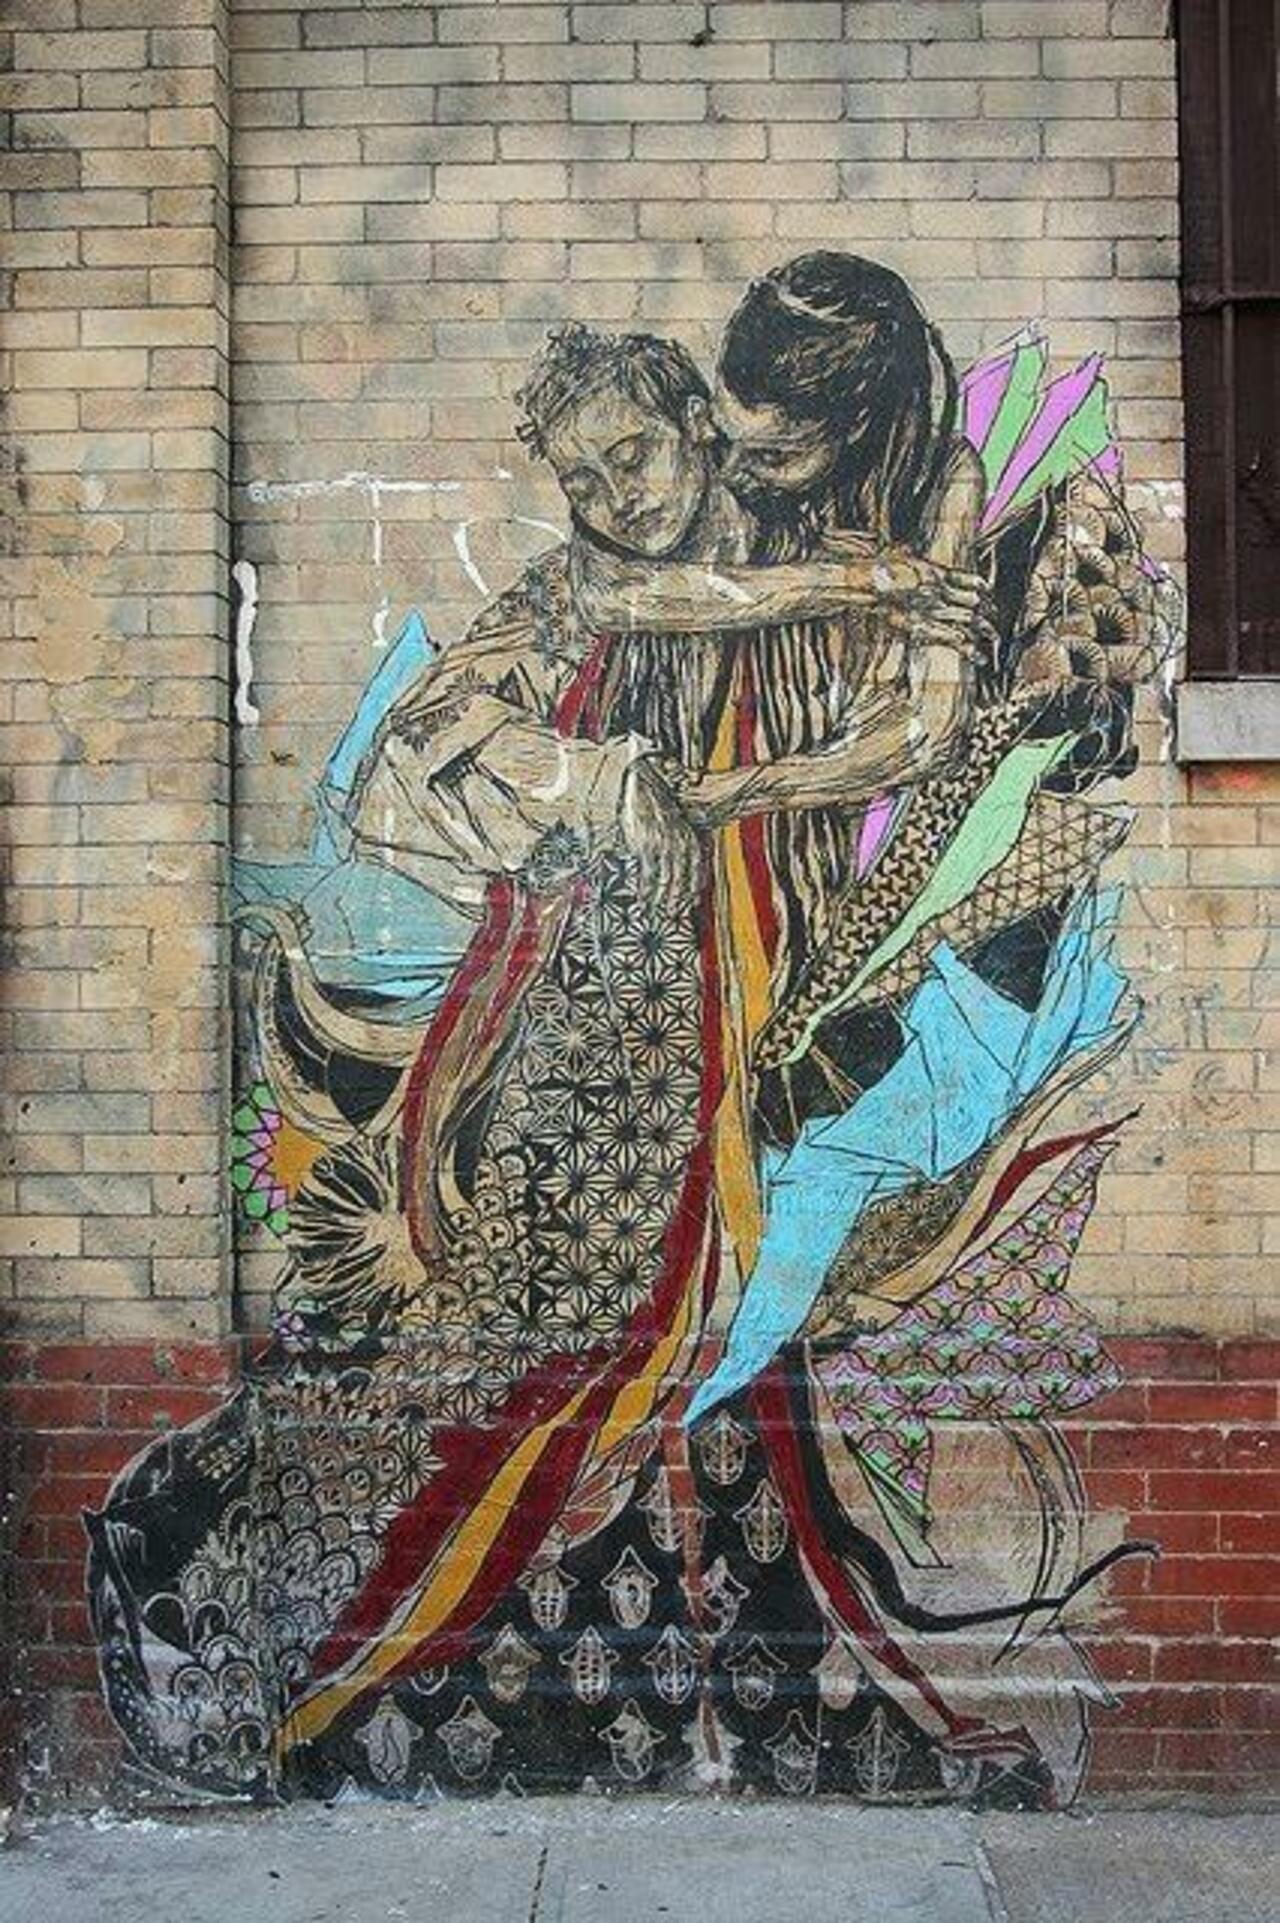 #Awesome #Streetart by #Swoon #Brooklyn #NYC #Popart #art #mural #graffiti .. #love this!!  http://t.co/gkGhPqhu8U